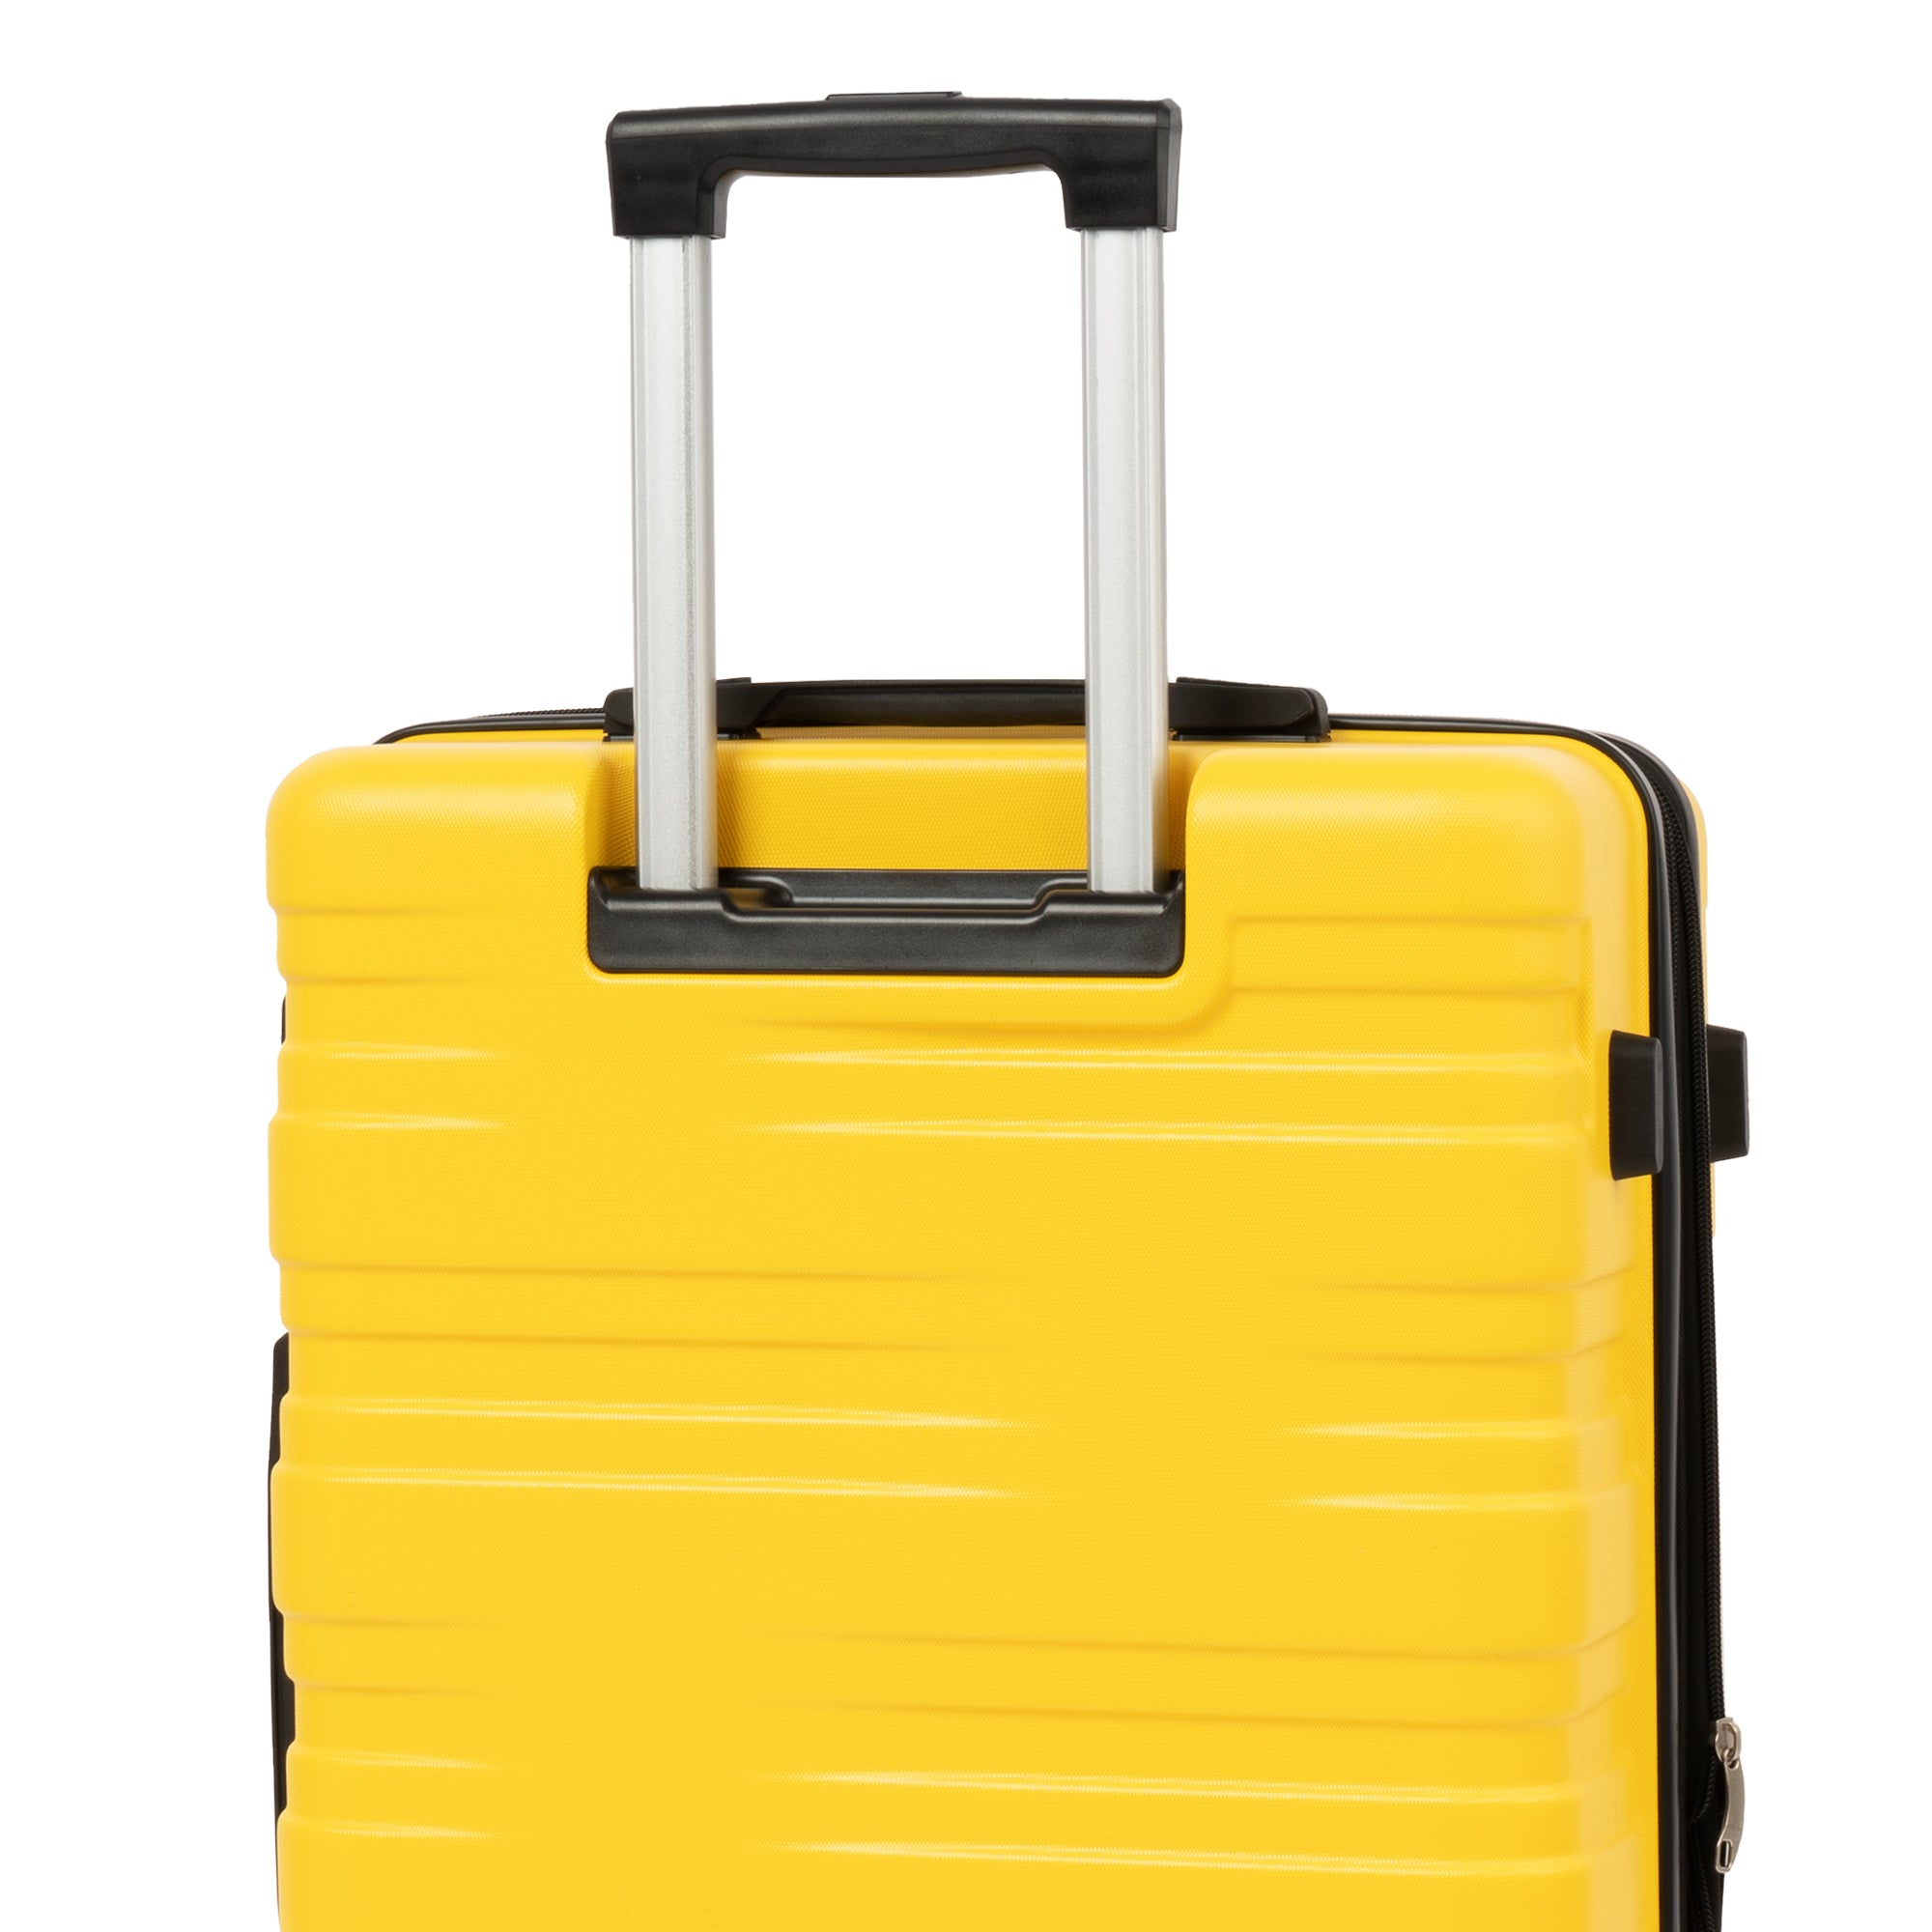 Merax Luggage with TSA Lock Spinner Wheels Hardside yellow-abs